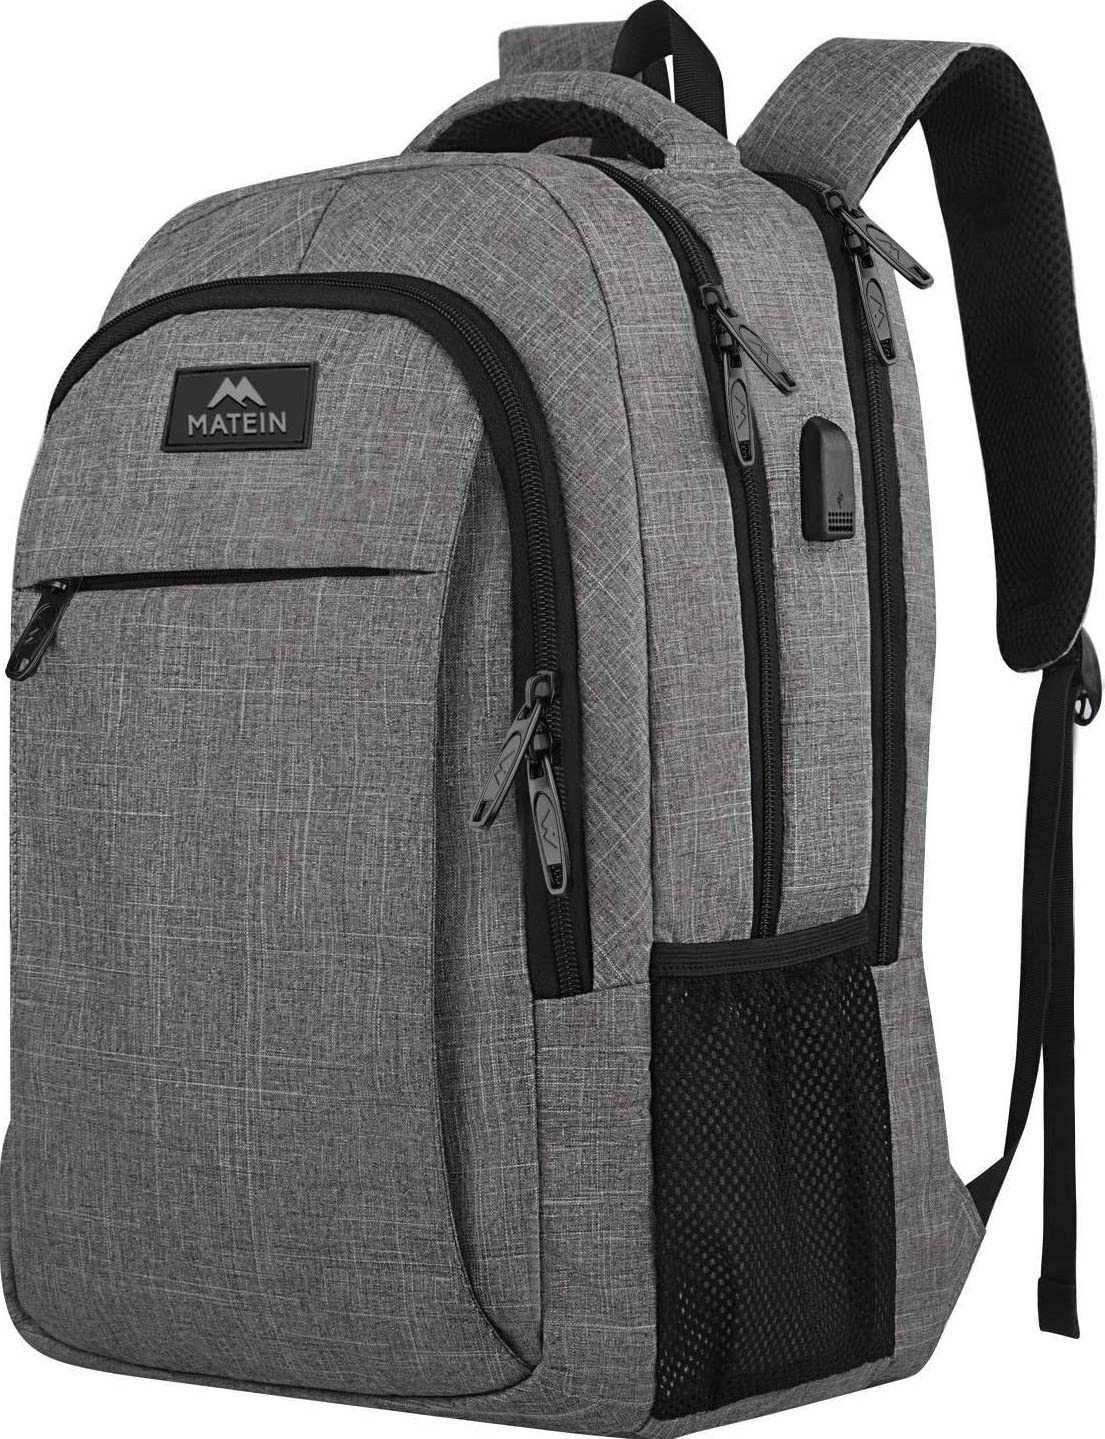 Retro-Metal-Rock Casual Waterproof Backpack-Lightweight Travel Daypack-Student School Bag for Travel School Shoping Sporting